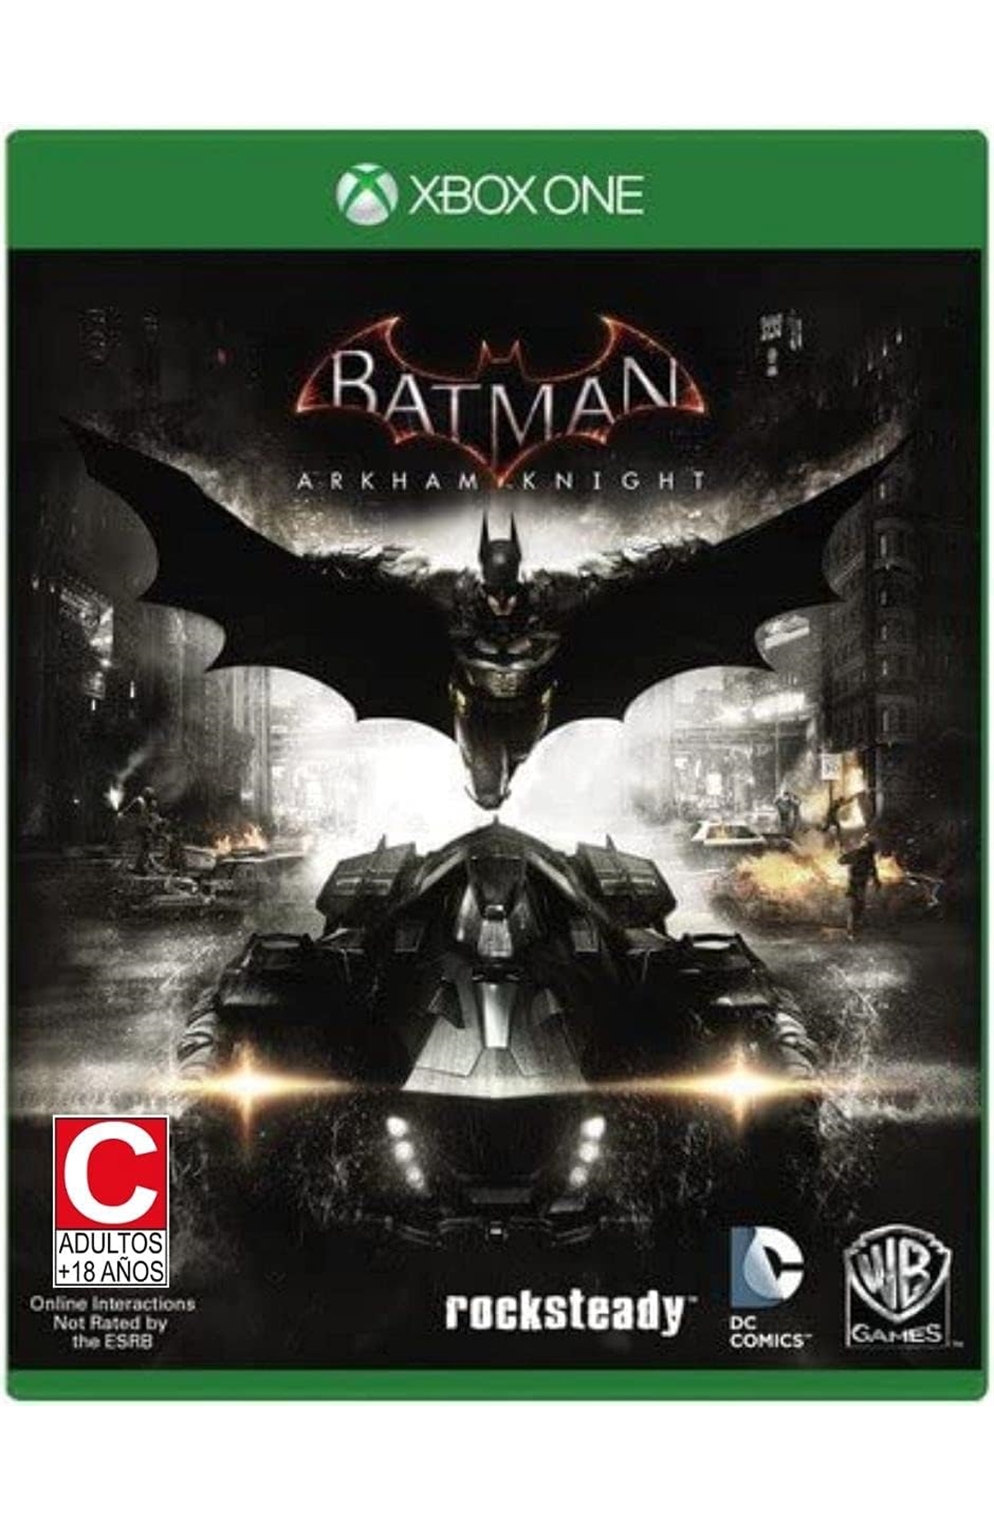 Xbox One Xb1 Batman Arkham Knight